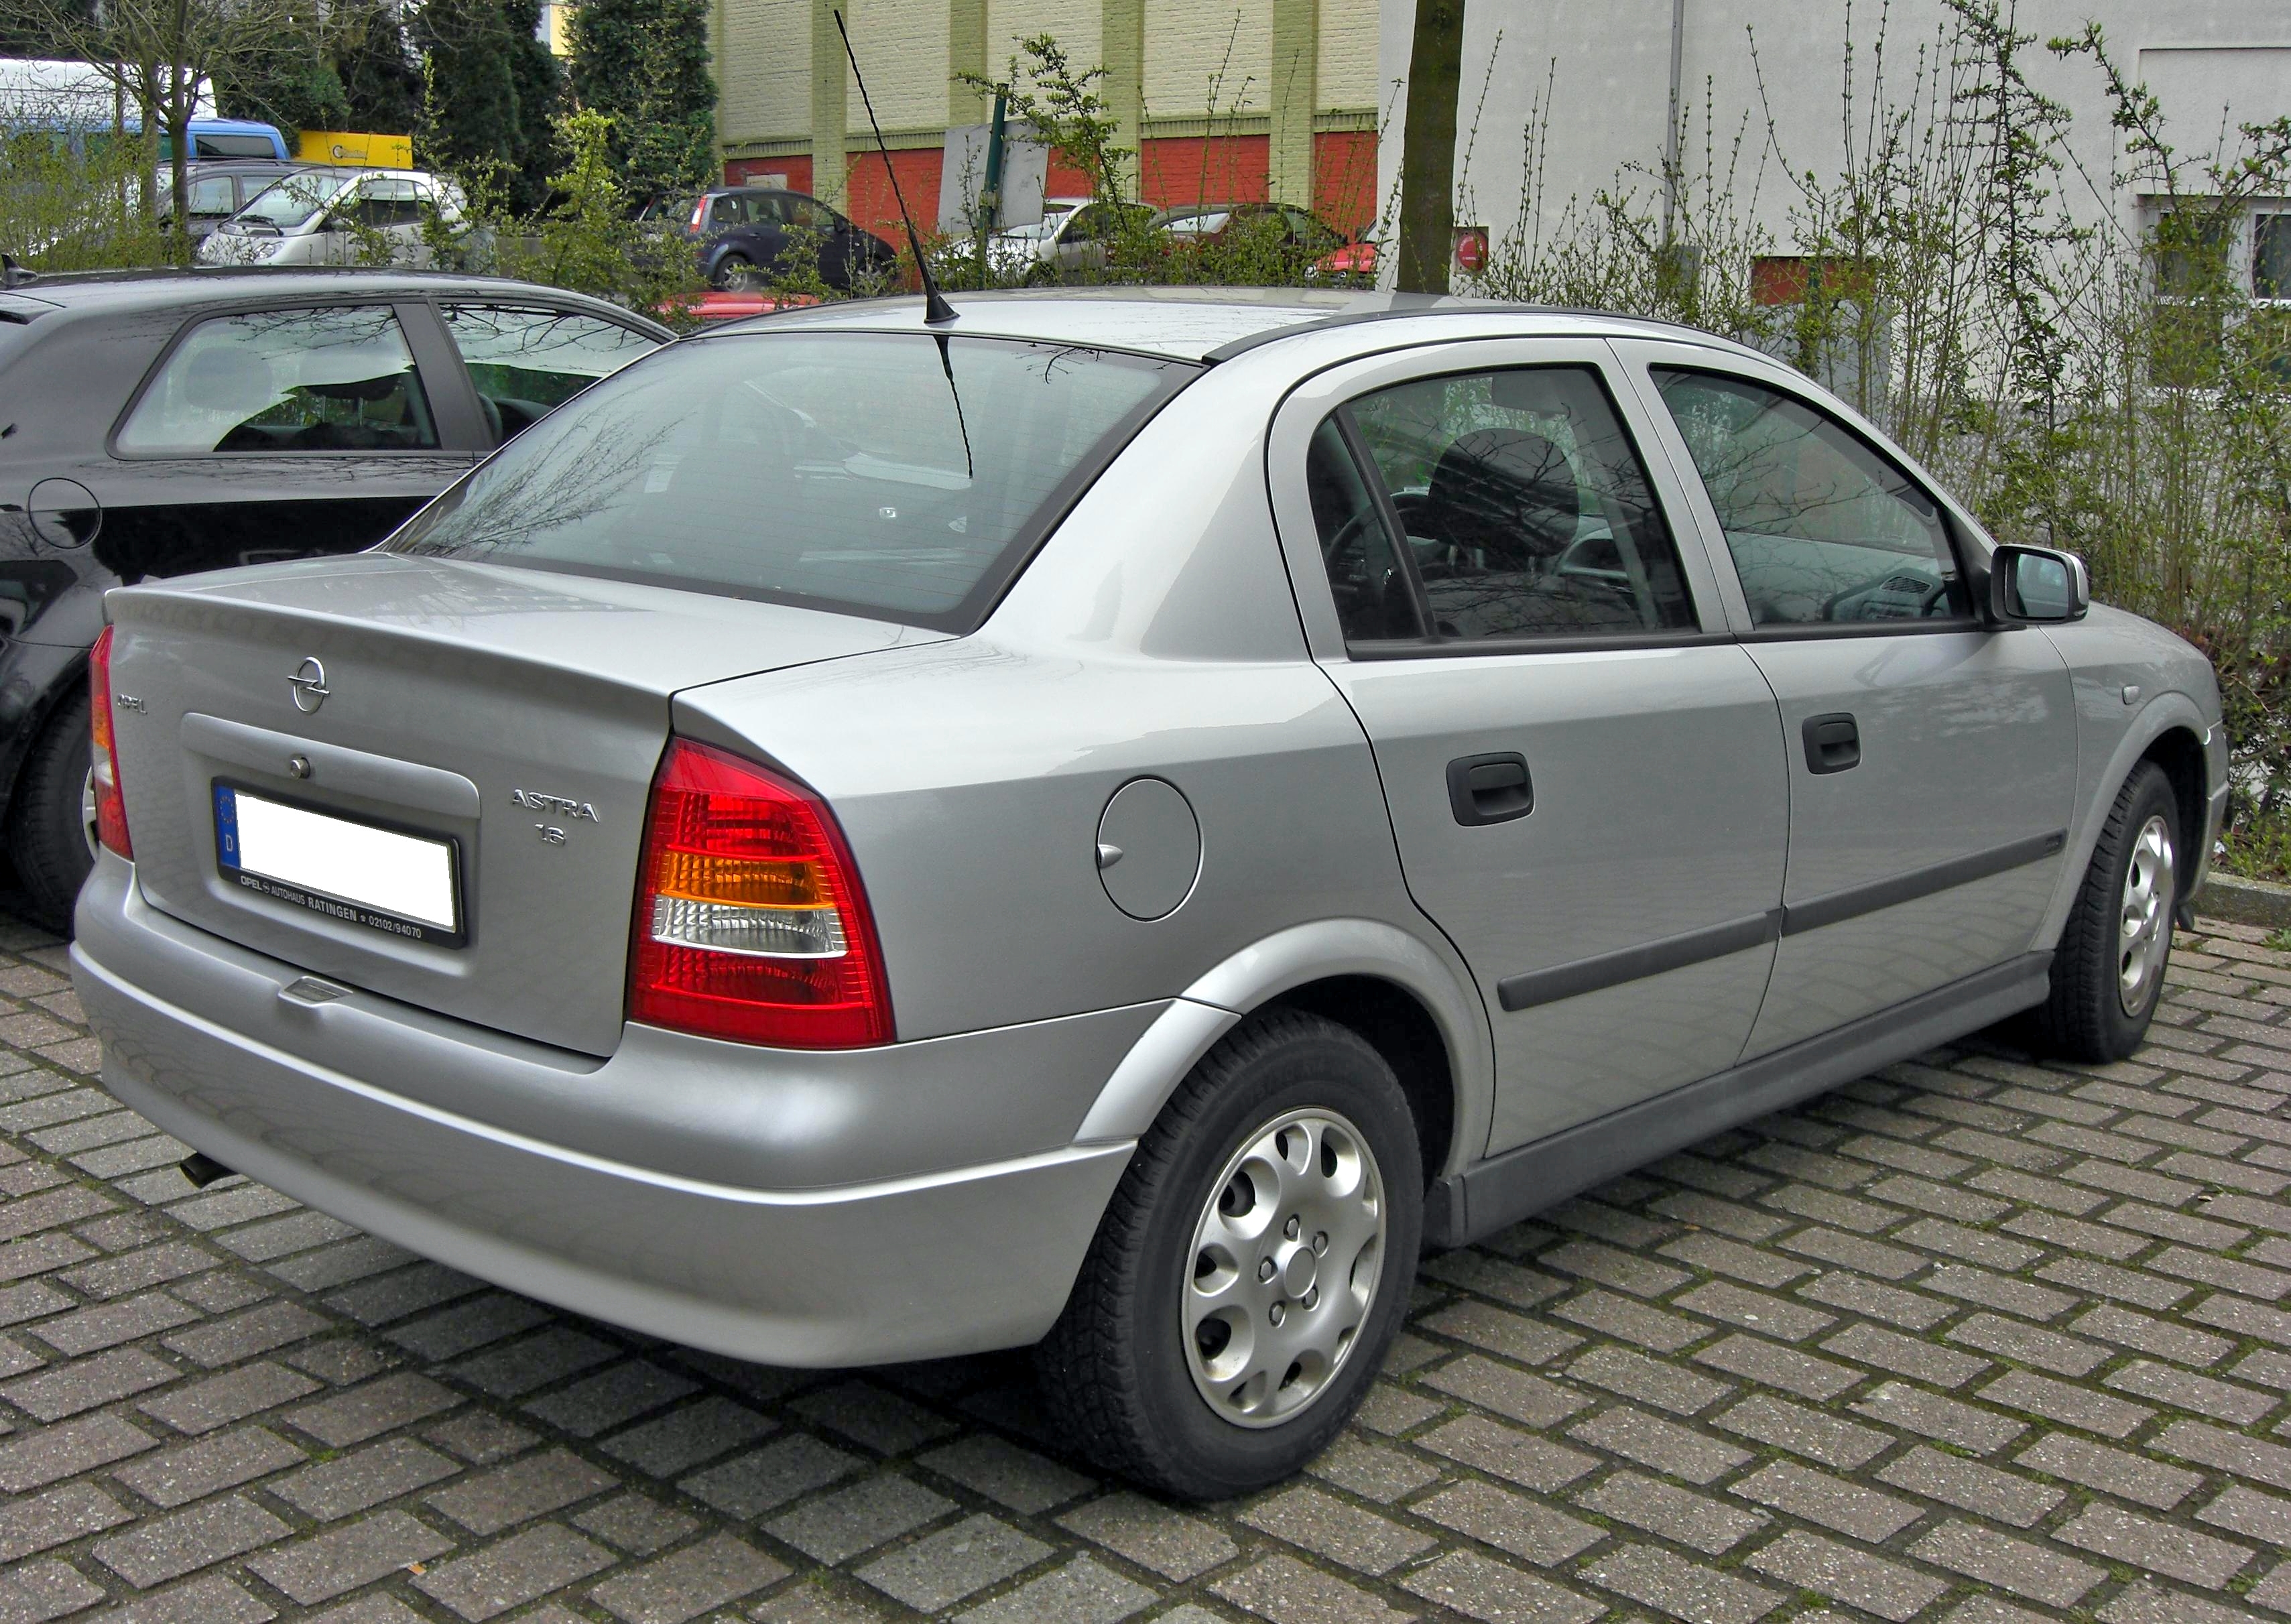 File:Opel Astra G Sedan.jpg - Wikipedia